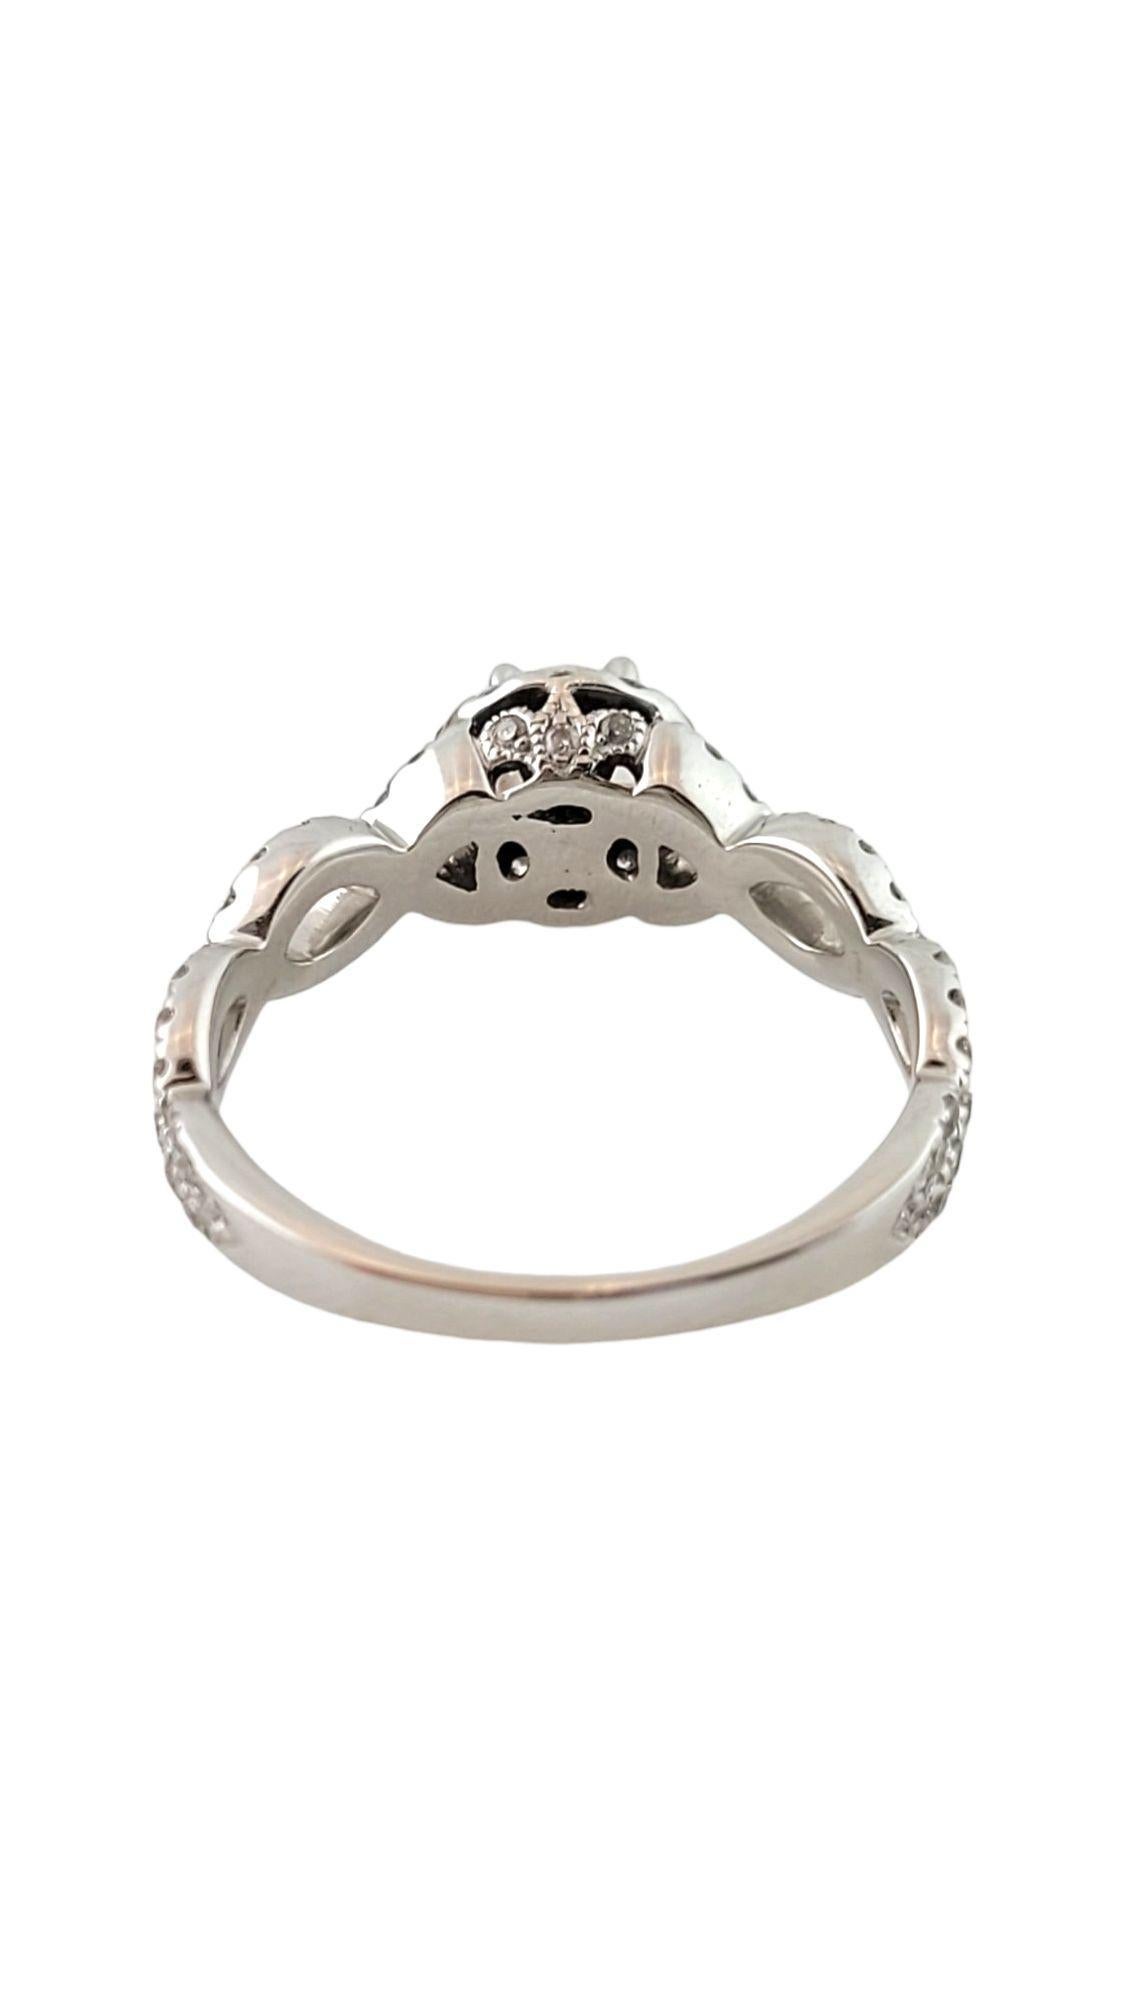 Brilliant Cut Neil Lane 14K White Gold Diamond Halo Ring Size 7.25 #14991 For Sale